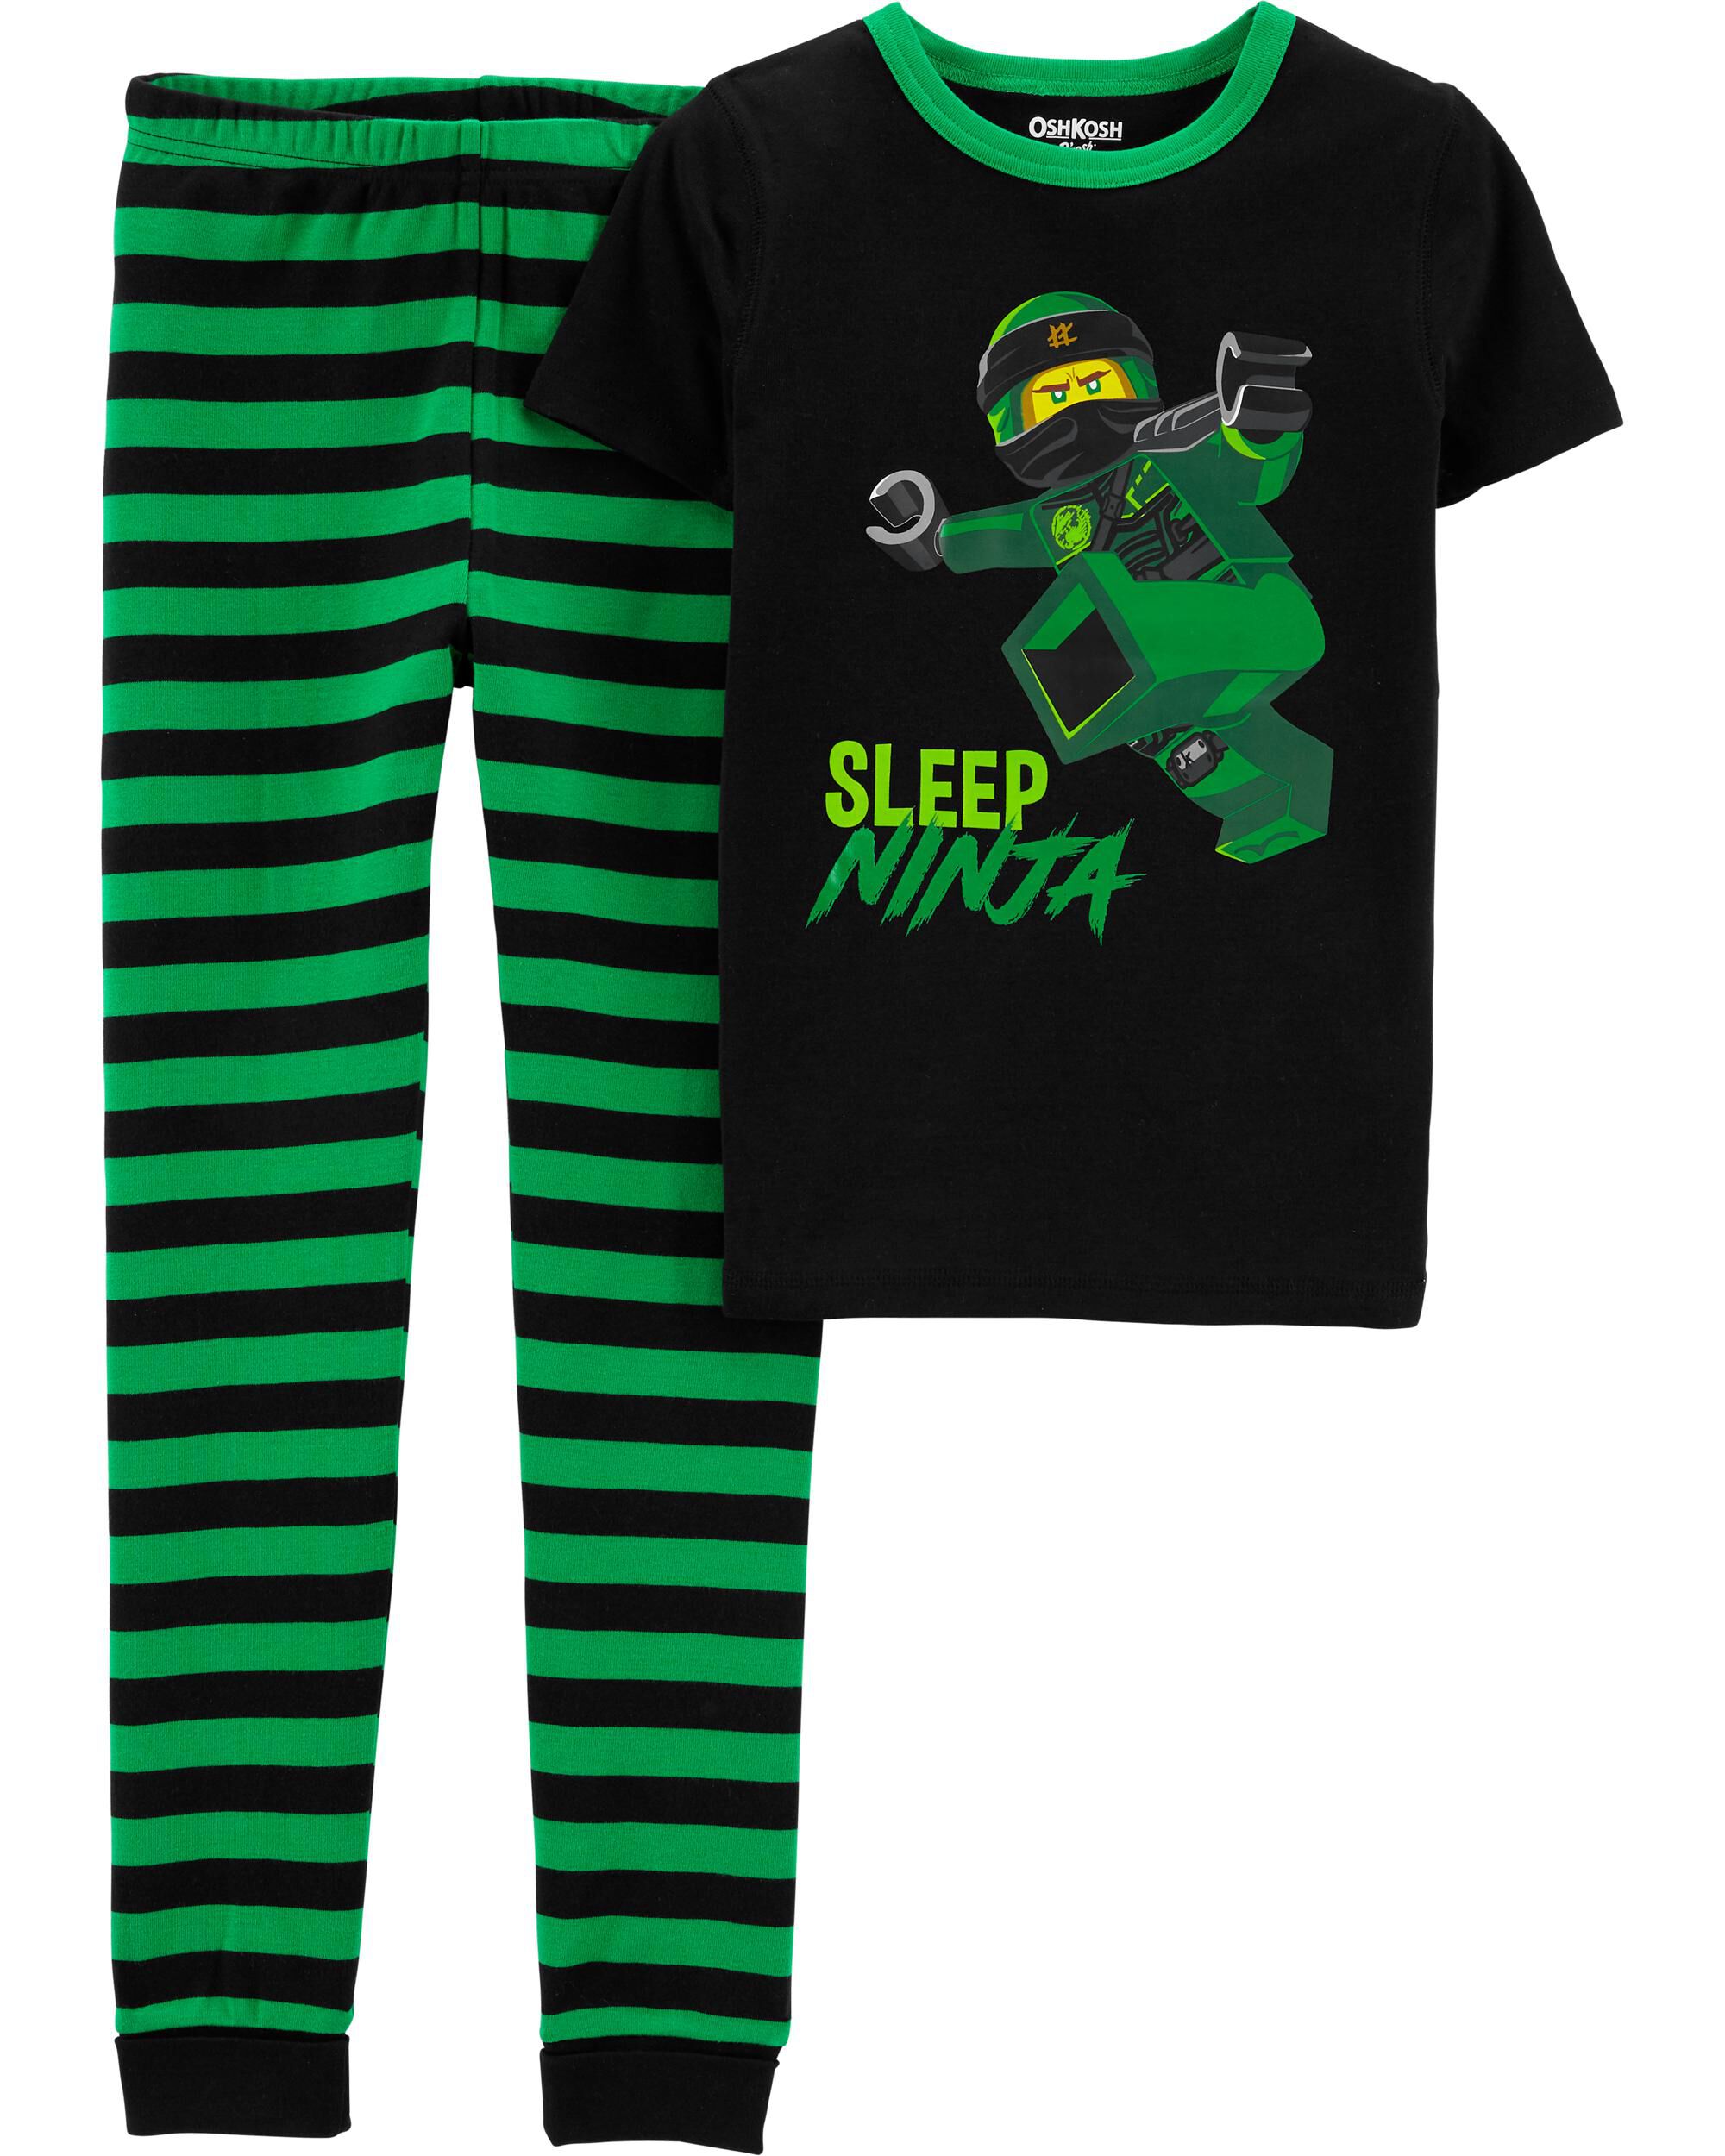 Boys Pyjamas Short Sleeve Nightwear Shorty Pjs Childrens Planet Design 2-7 Years